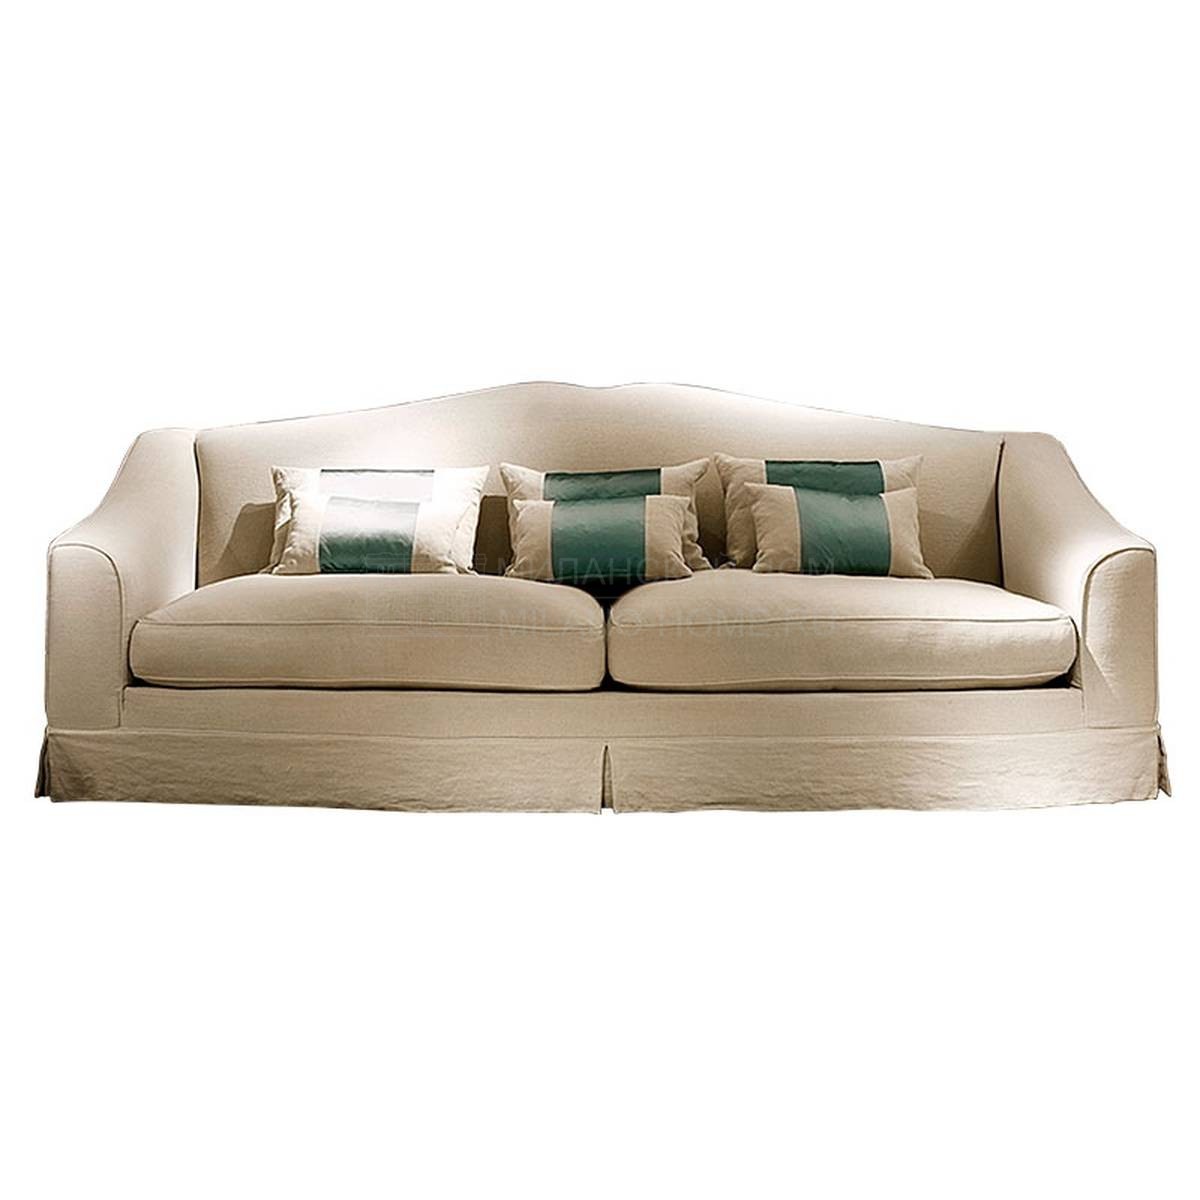 Прямой диван Giasome/ sofa из Италии фабрики SOFTHOUSE